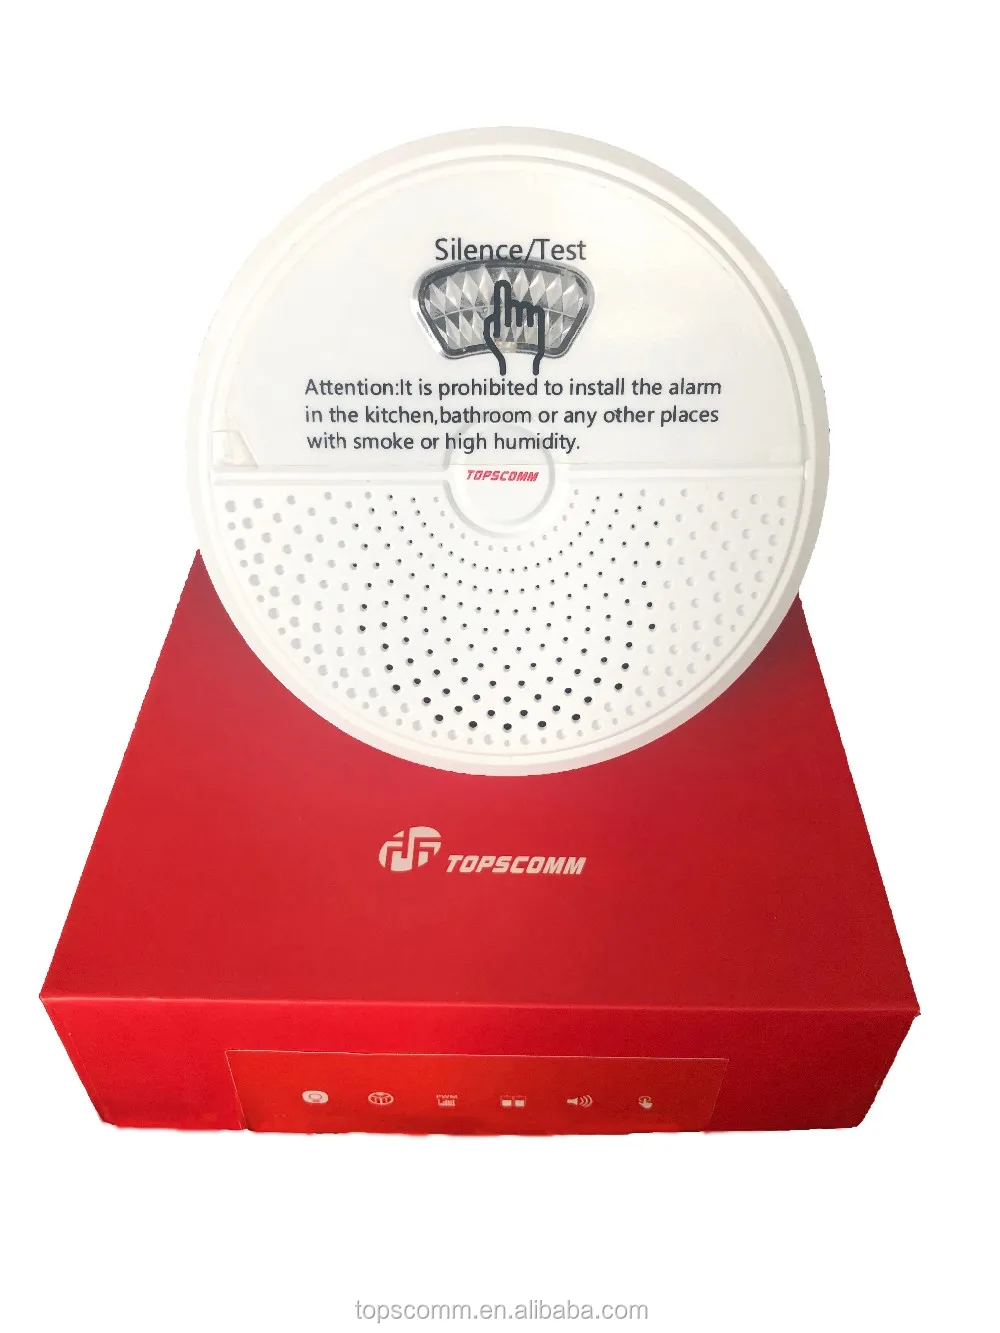 Travel Cheap Smoke Alarm Smoke Detector Of Topscomm Wireless Fire Alarm System Buy Cheap Smoke Alarms Wireless Fire Alarm System Travel Smoke Alarm Smoke Detector Product On Alibaba Com